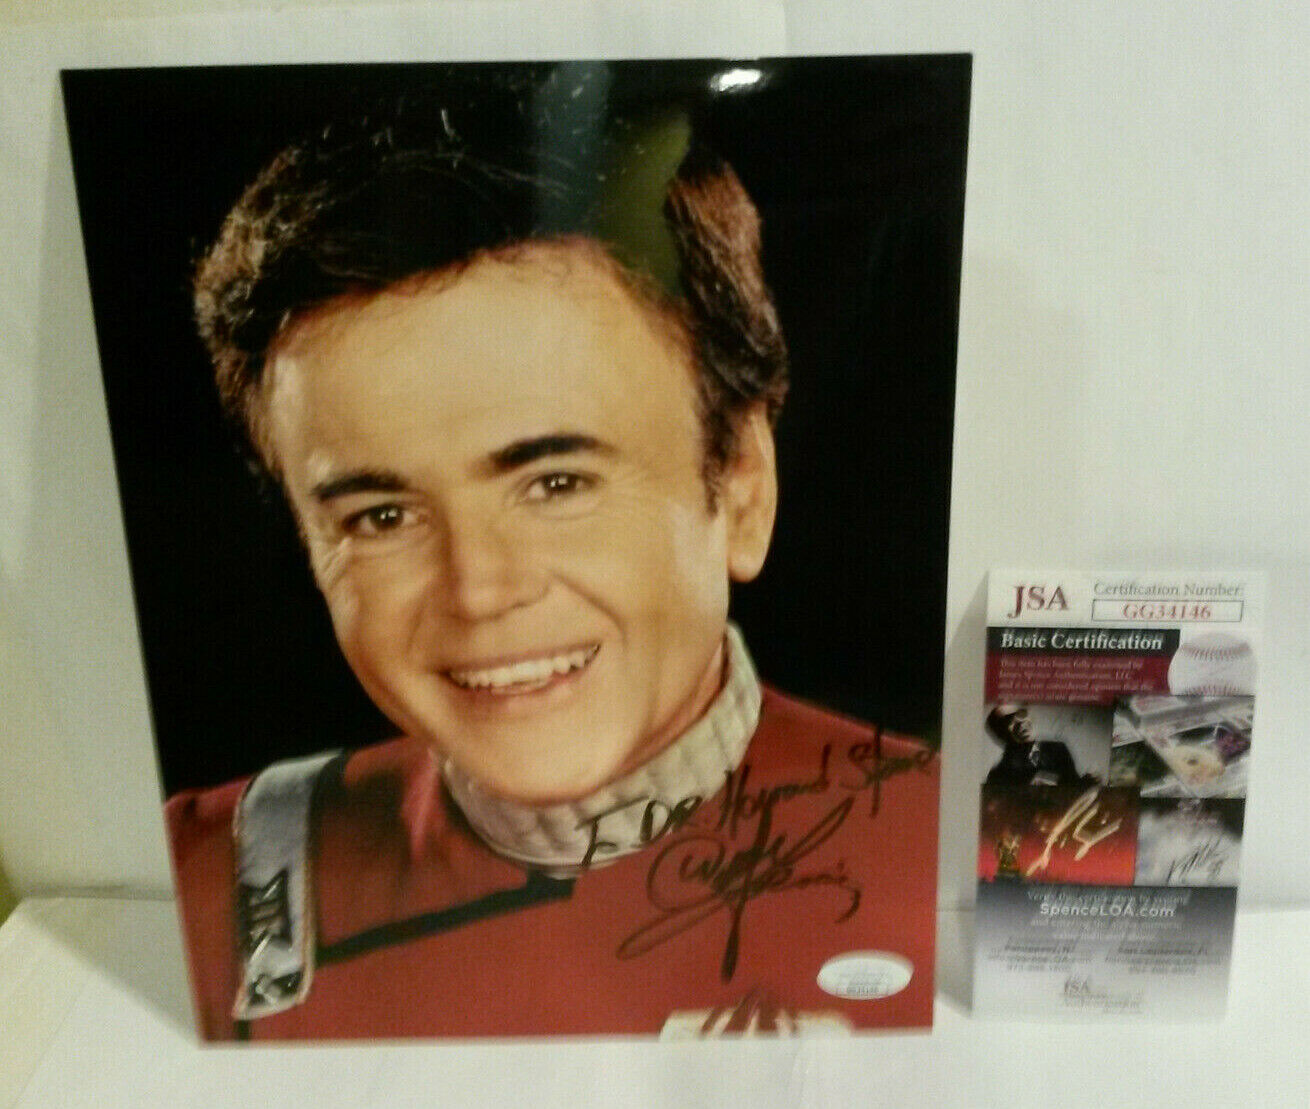 Walter Koenig hand signed photo autograph JSA cert. Star Trek TOS Chekov